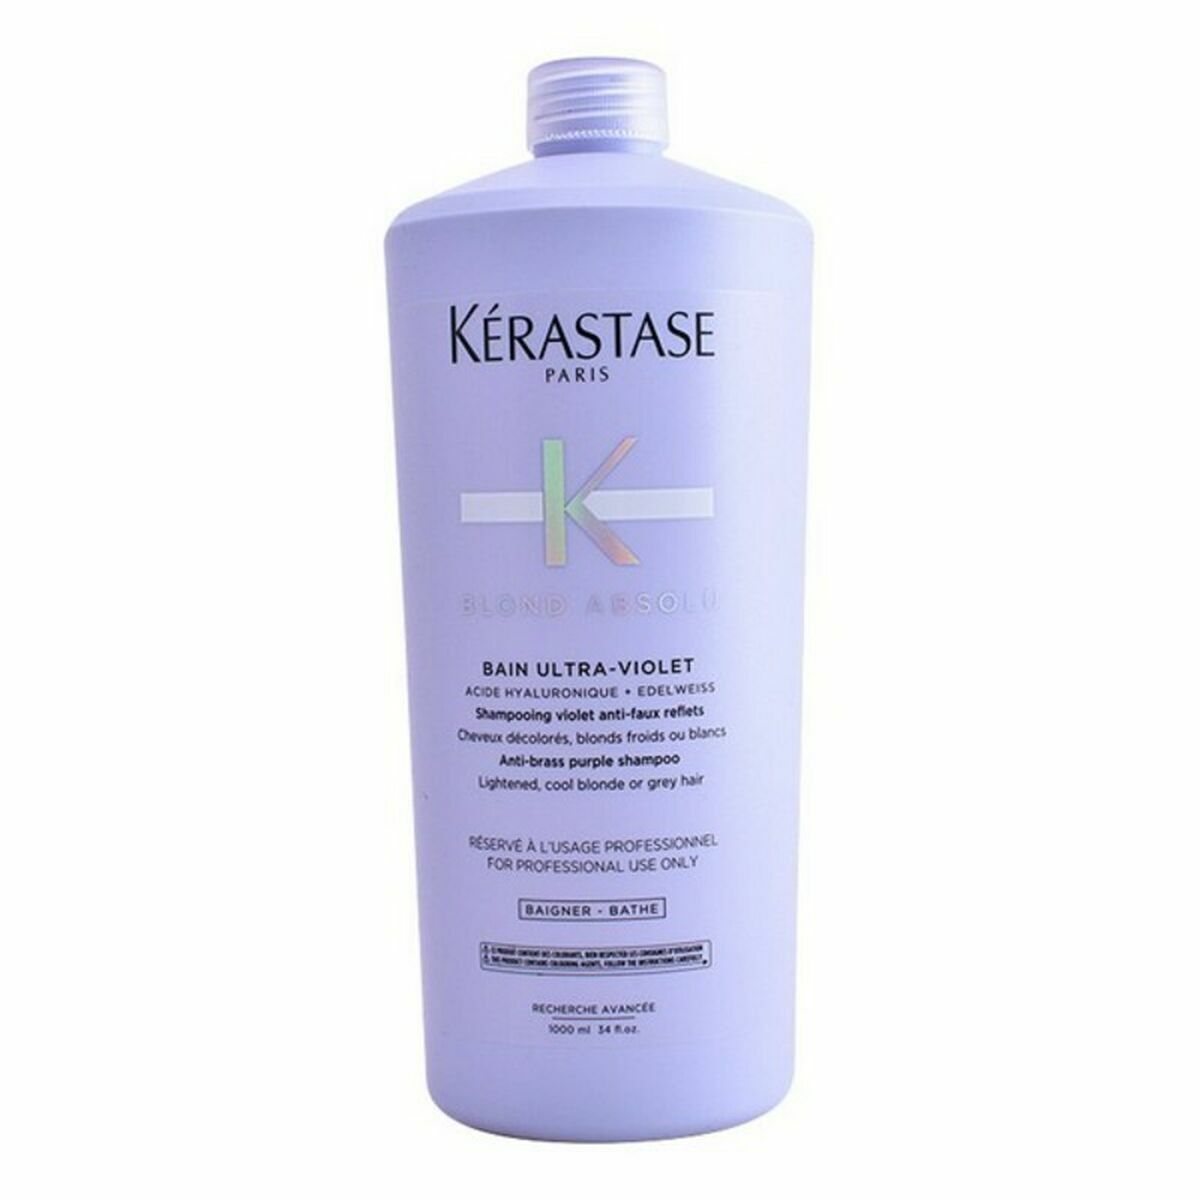 Kaufe Shampoo Blond Absolu Bain Ultra-Violet Kerastase 1 L bei AWK Flagship um € 85.00